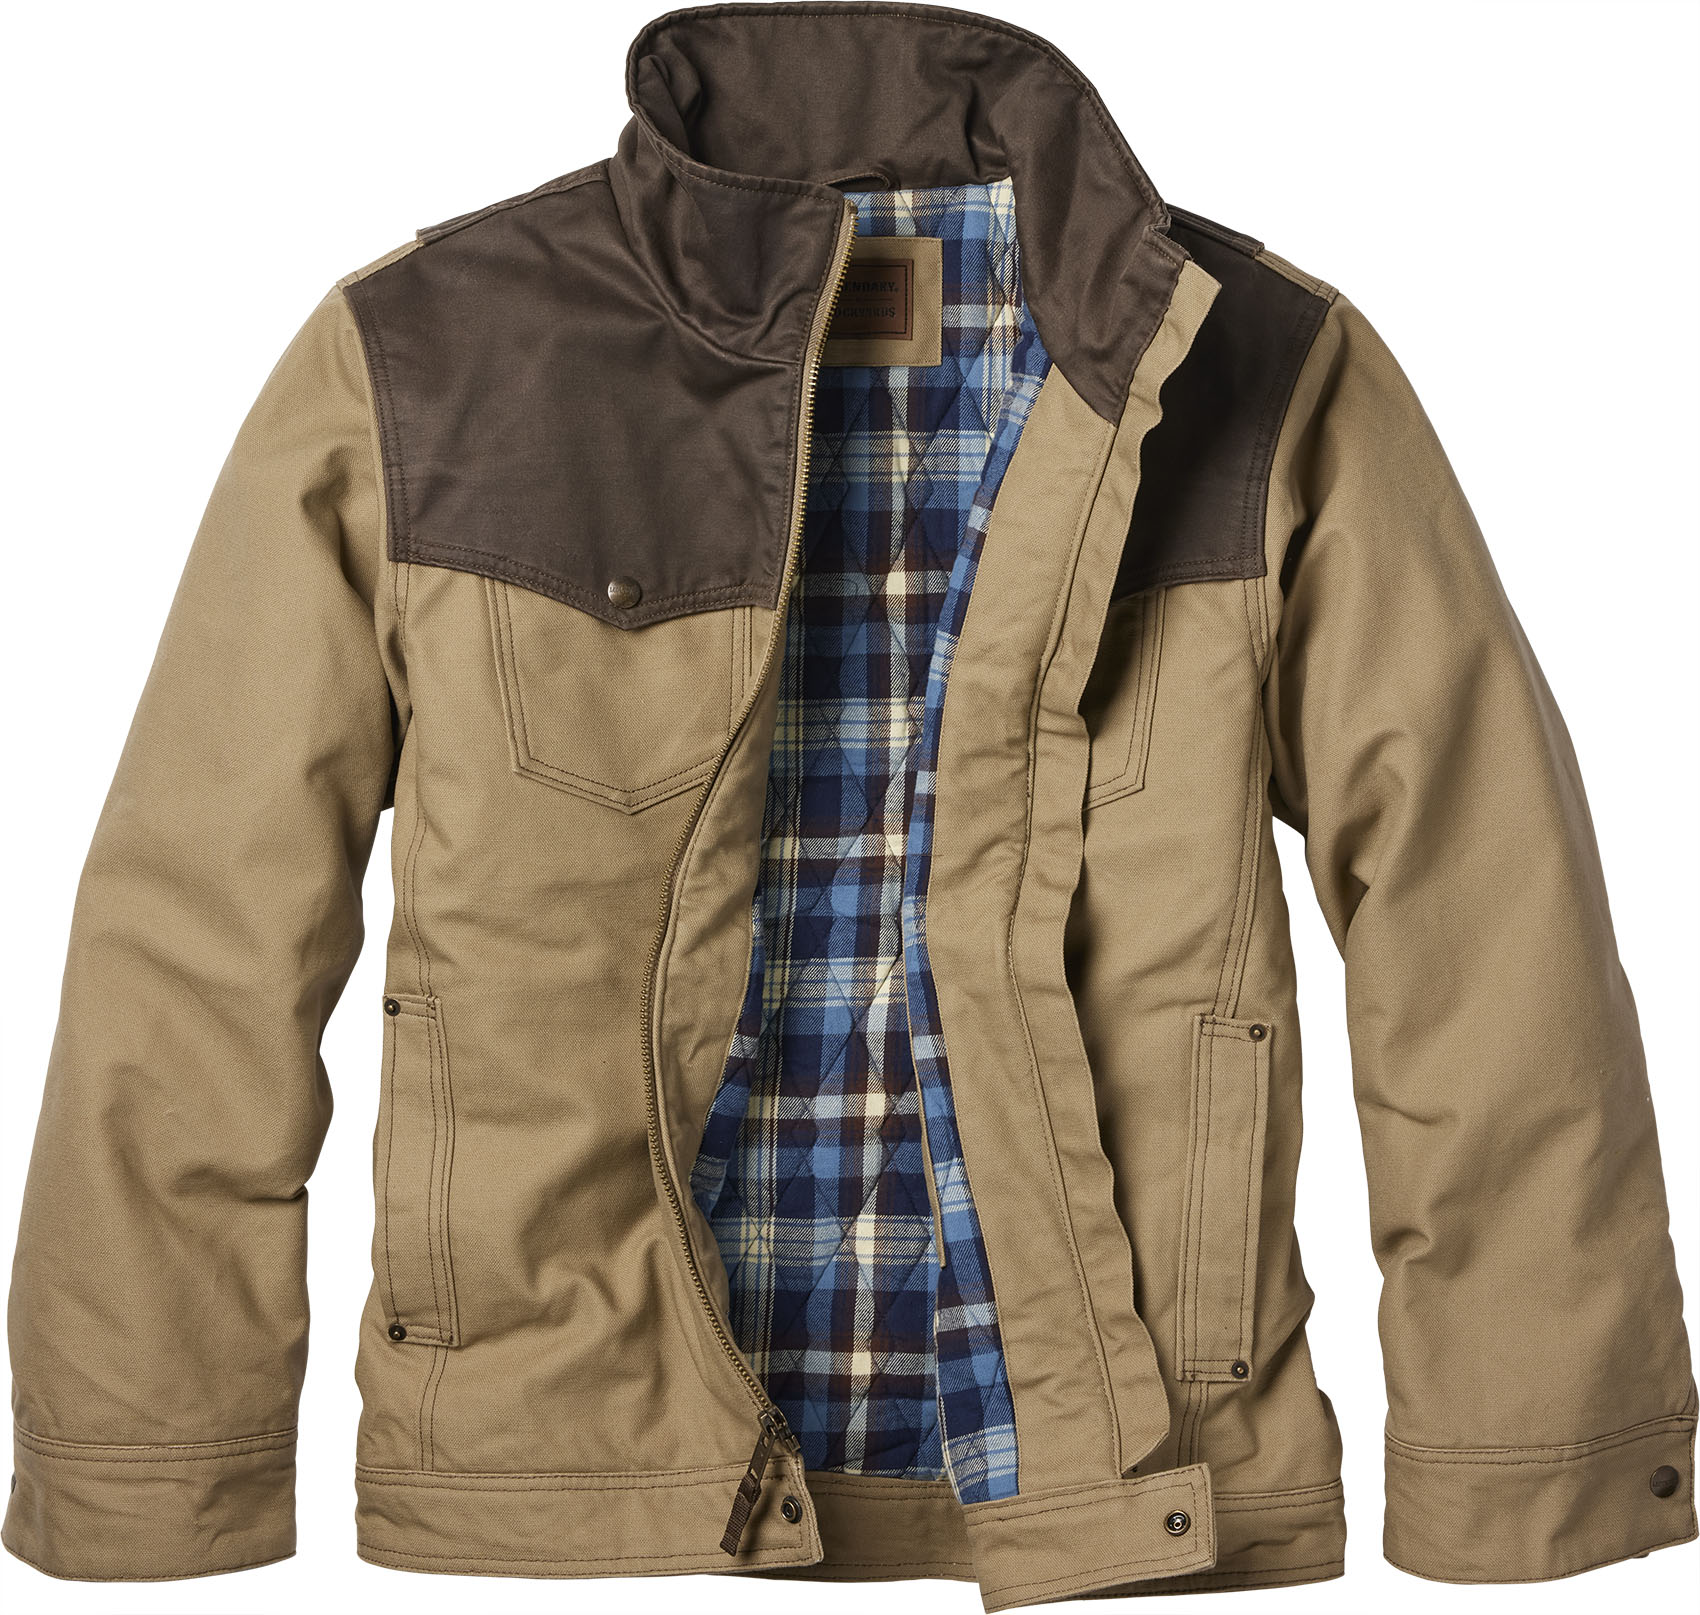 Men's Stockyards Cowboy Cut Flannel Lined Denim Jacket